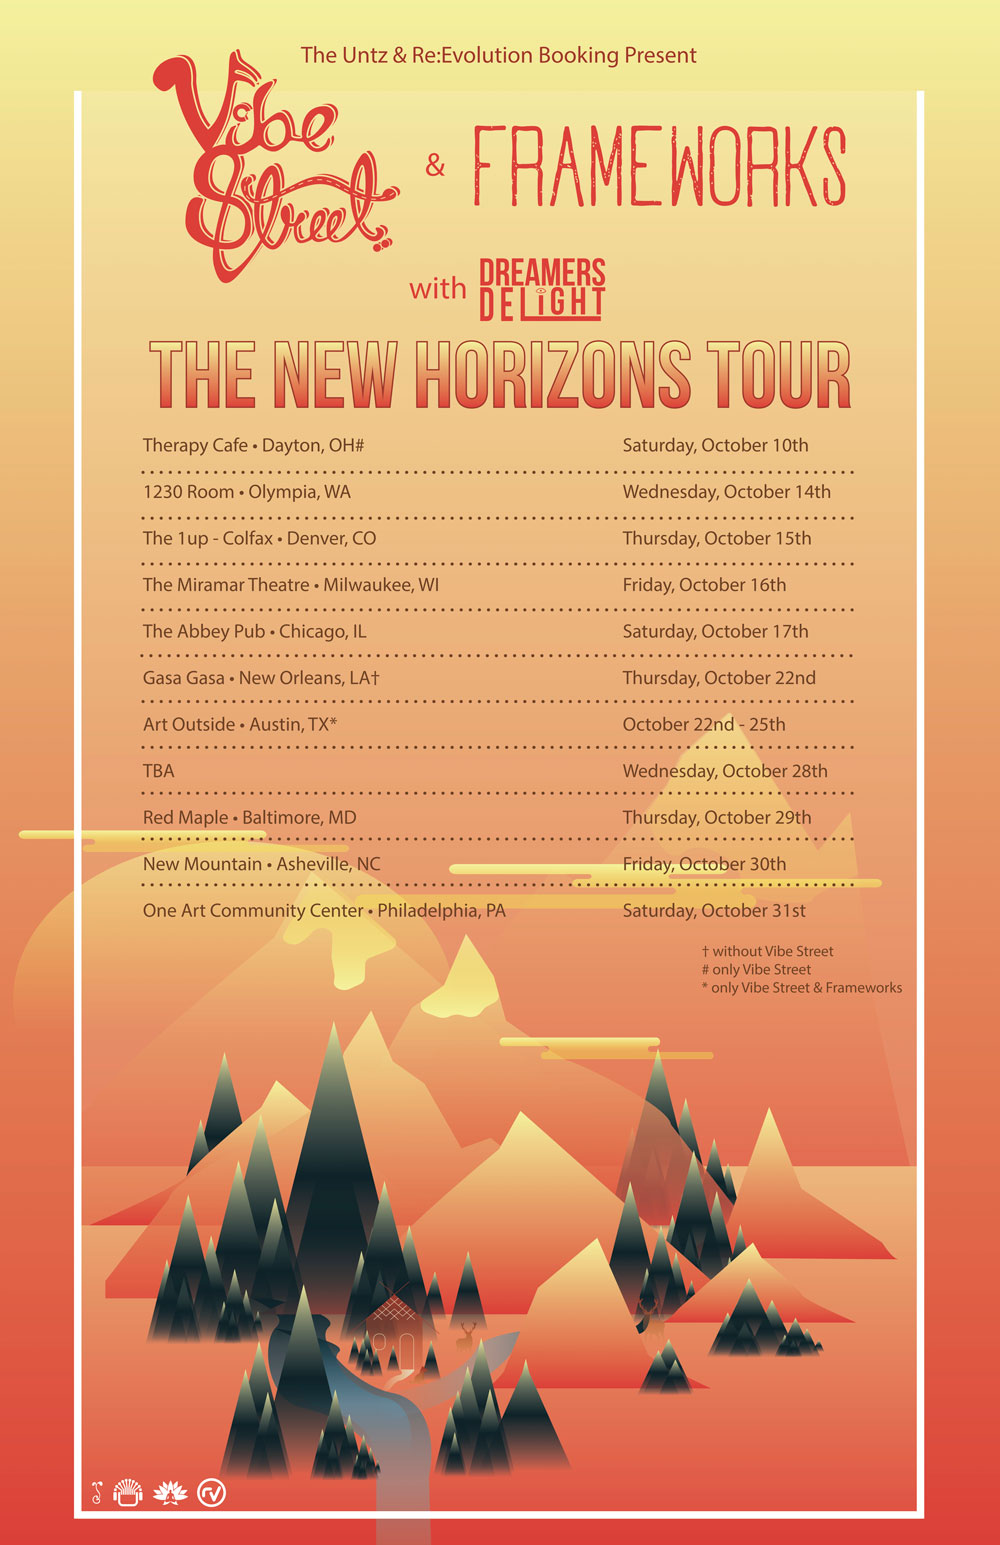 THE NEW HORIZONS TOUR